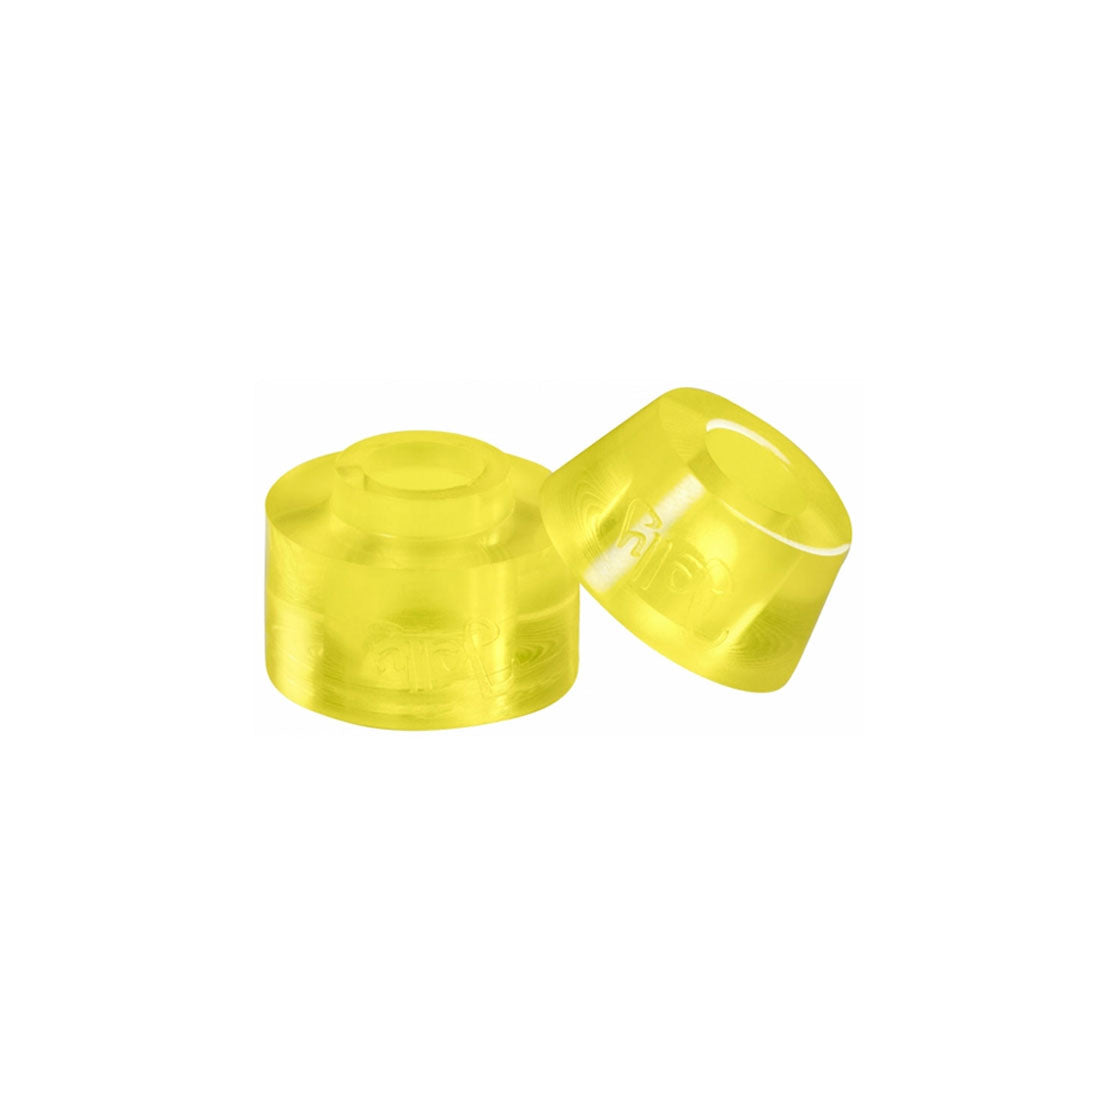 Chaya Jelly Interlock Cushions 95a 8pk - Yellow Roller Skate Hardware and Parts